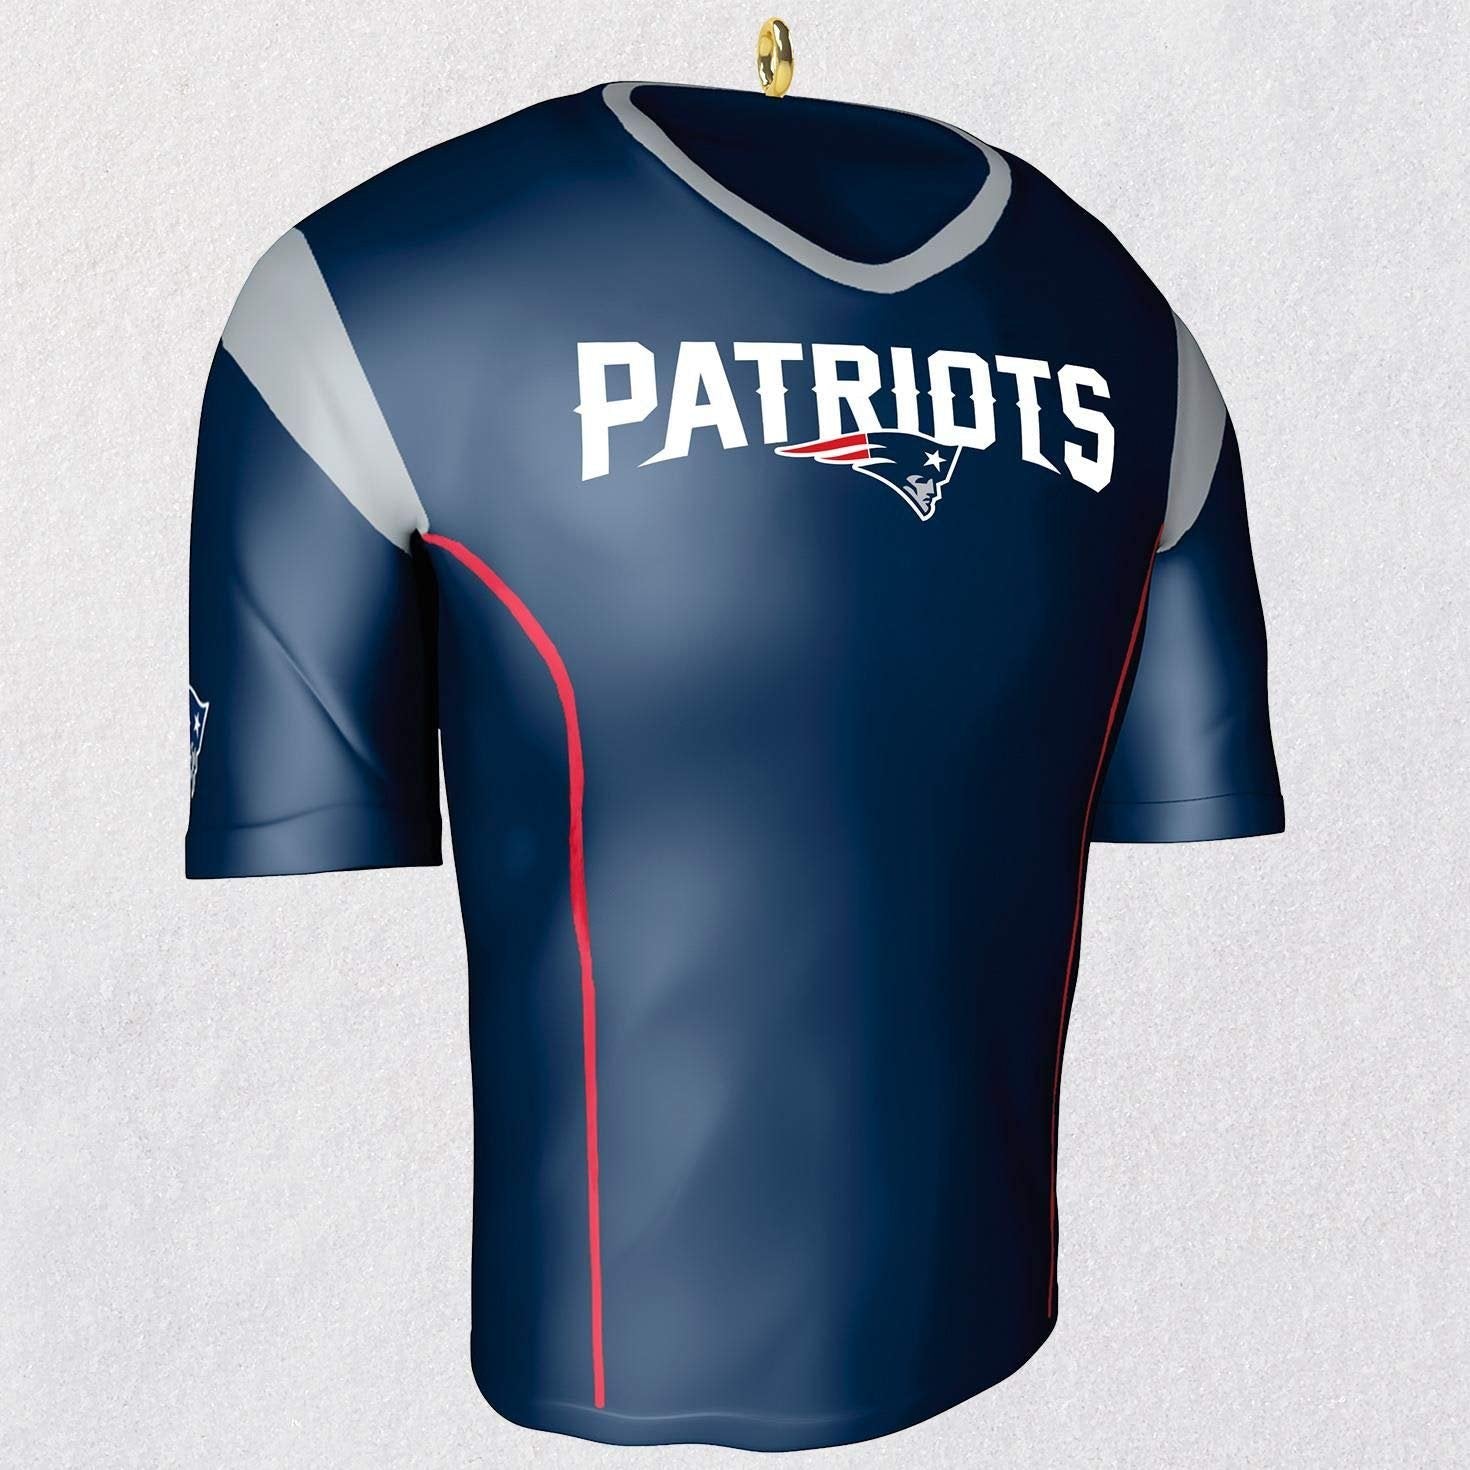 Hallmark New England Patriots Jersey Keepsake Ornament